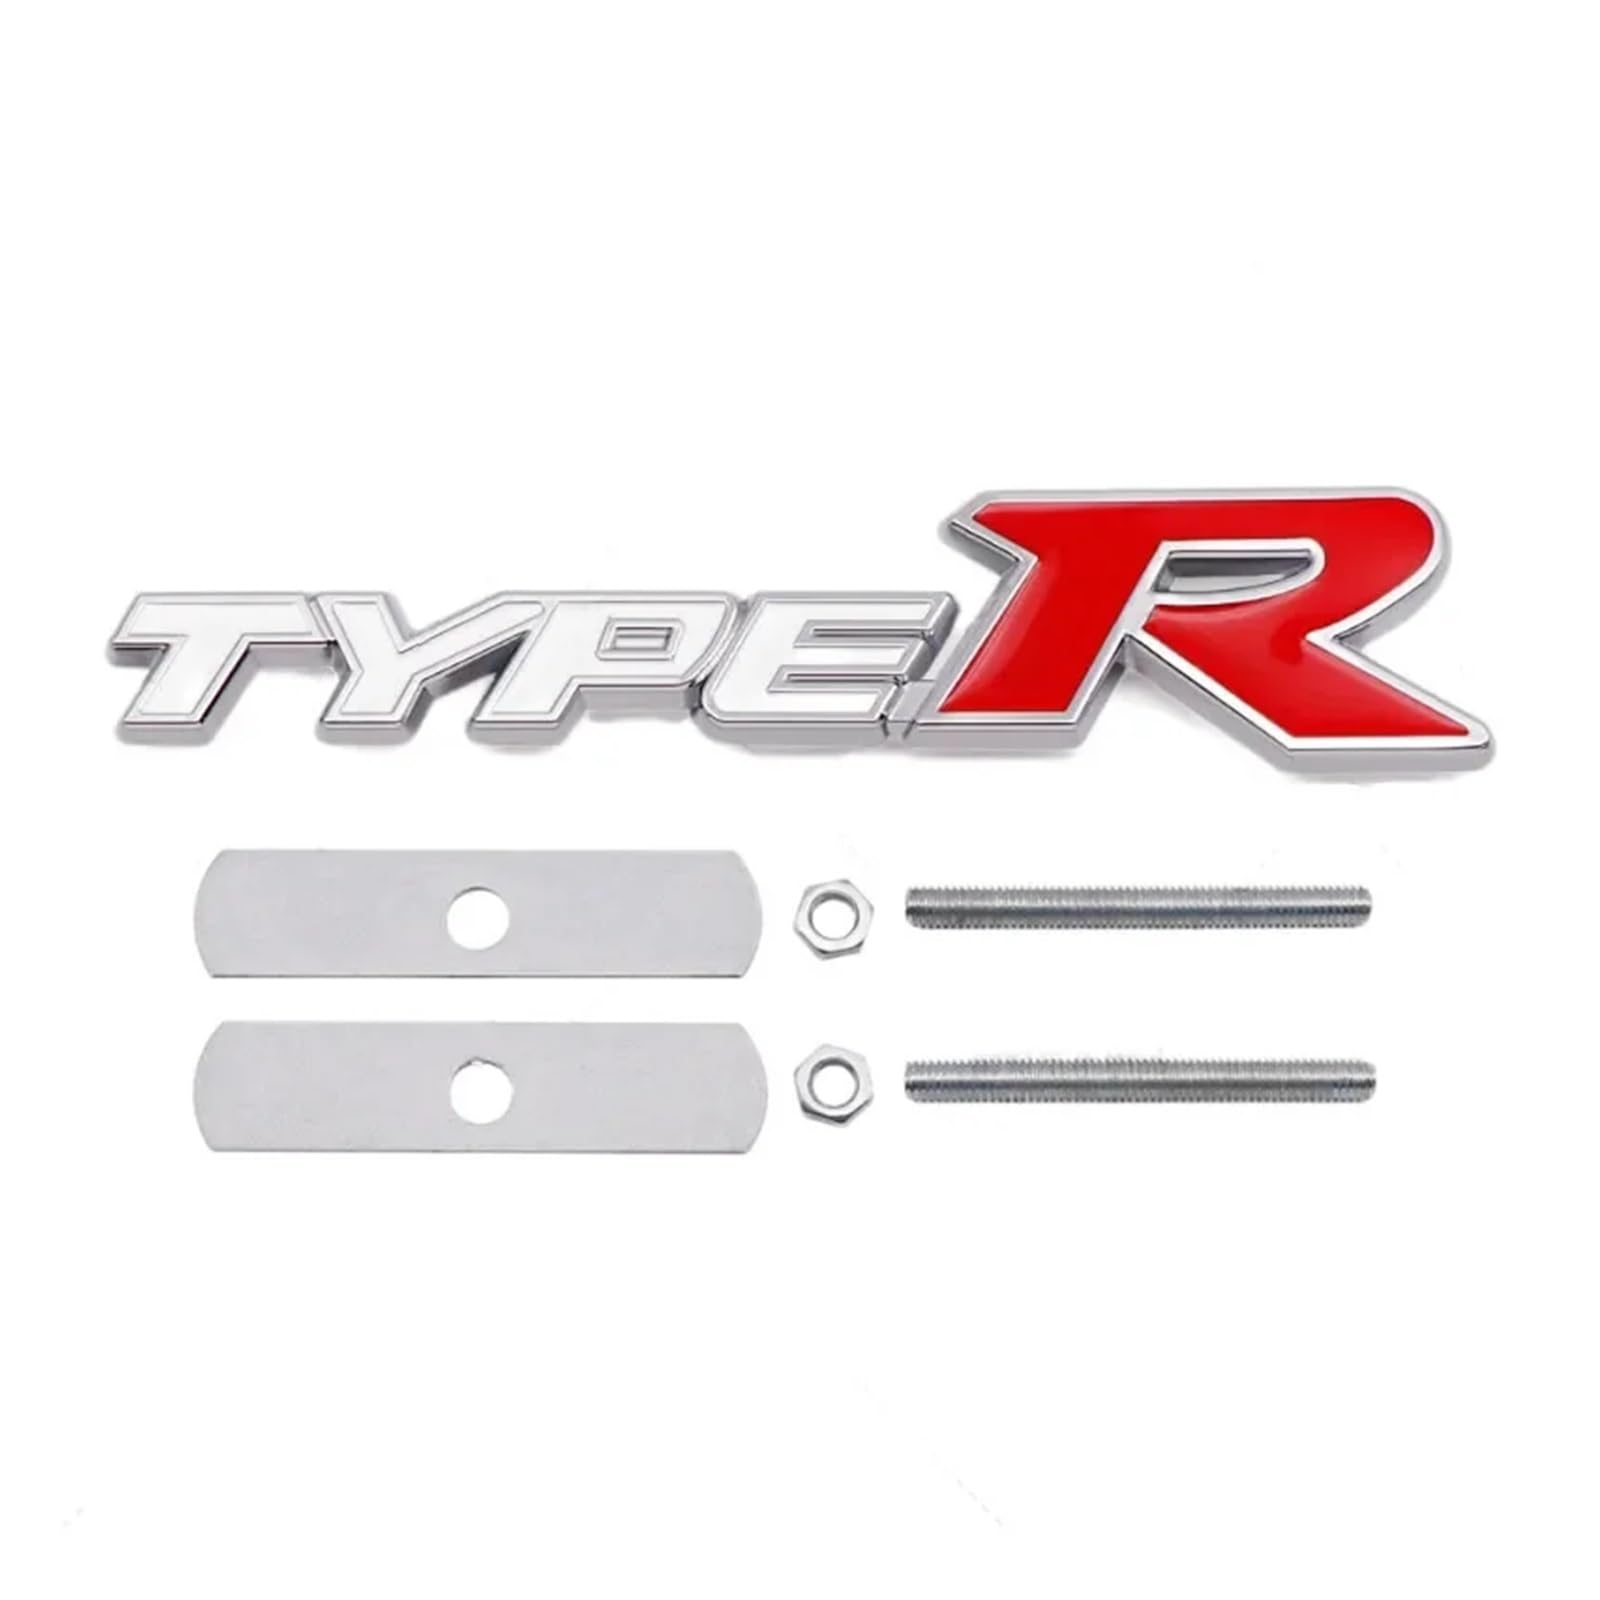 AQXYWQLL 3D-Metall-Typ-R-Logo, Frontgrill-Abzeichen, Heckkoffer-Emblem-Aufkleber, kompatibel mit Civic TYPER CRV HRV Accord Fit Autozubehör(Color:Grill White Red) von AQXYWQLL